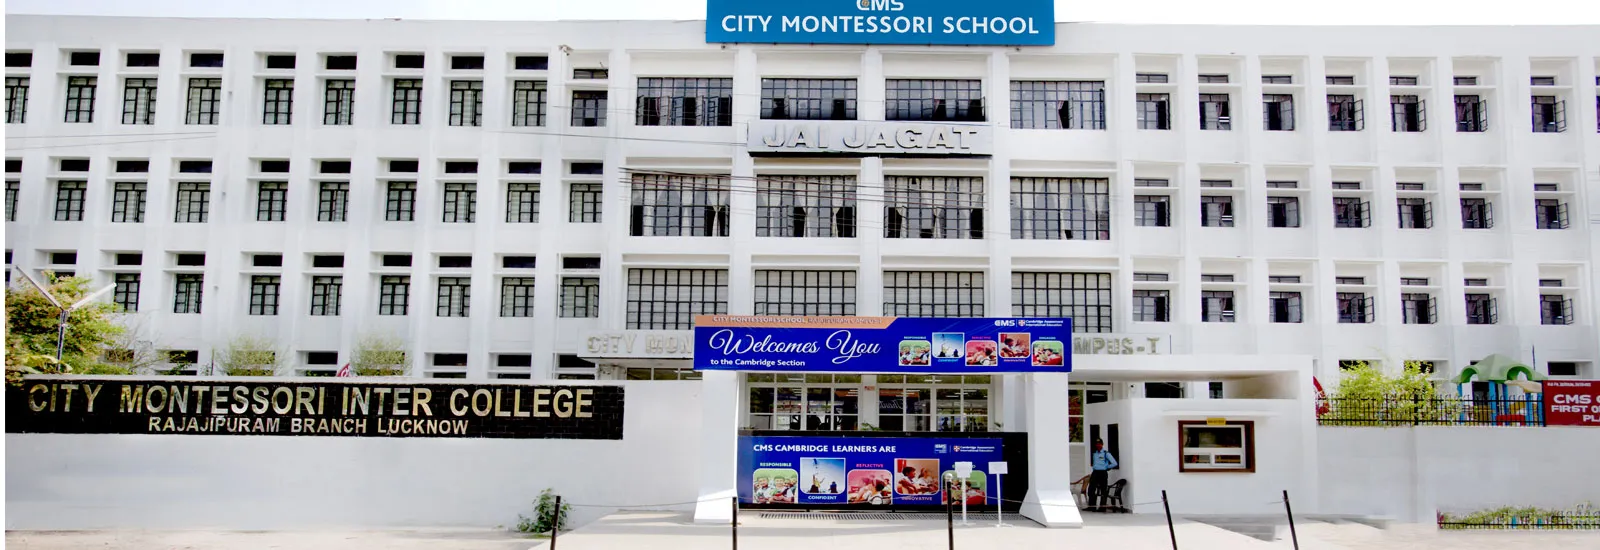 City Montessori School, Rajaji Puram Campus I